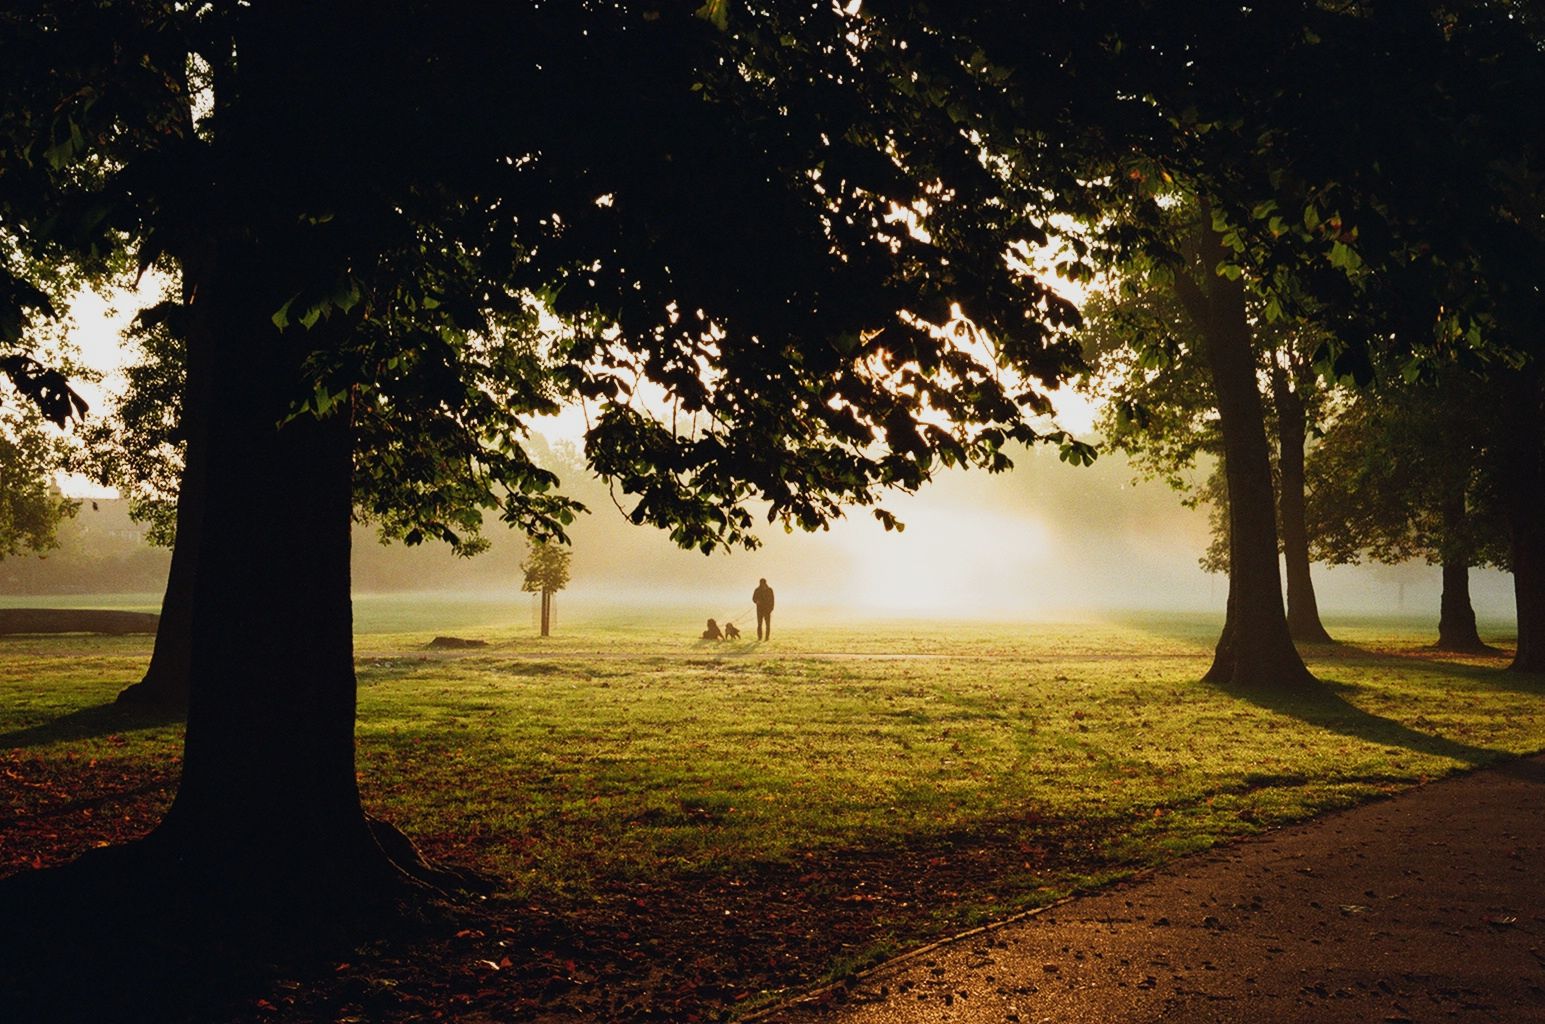 Man and dog in Queen's Park, London (Kodak Ultramax 400)